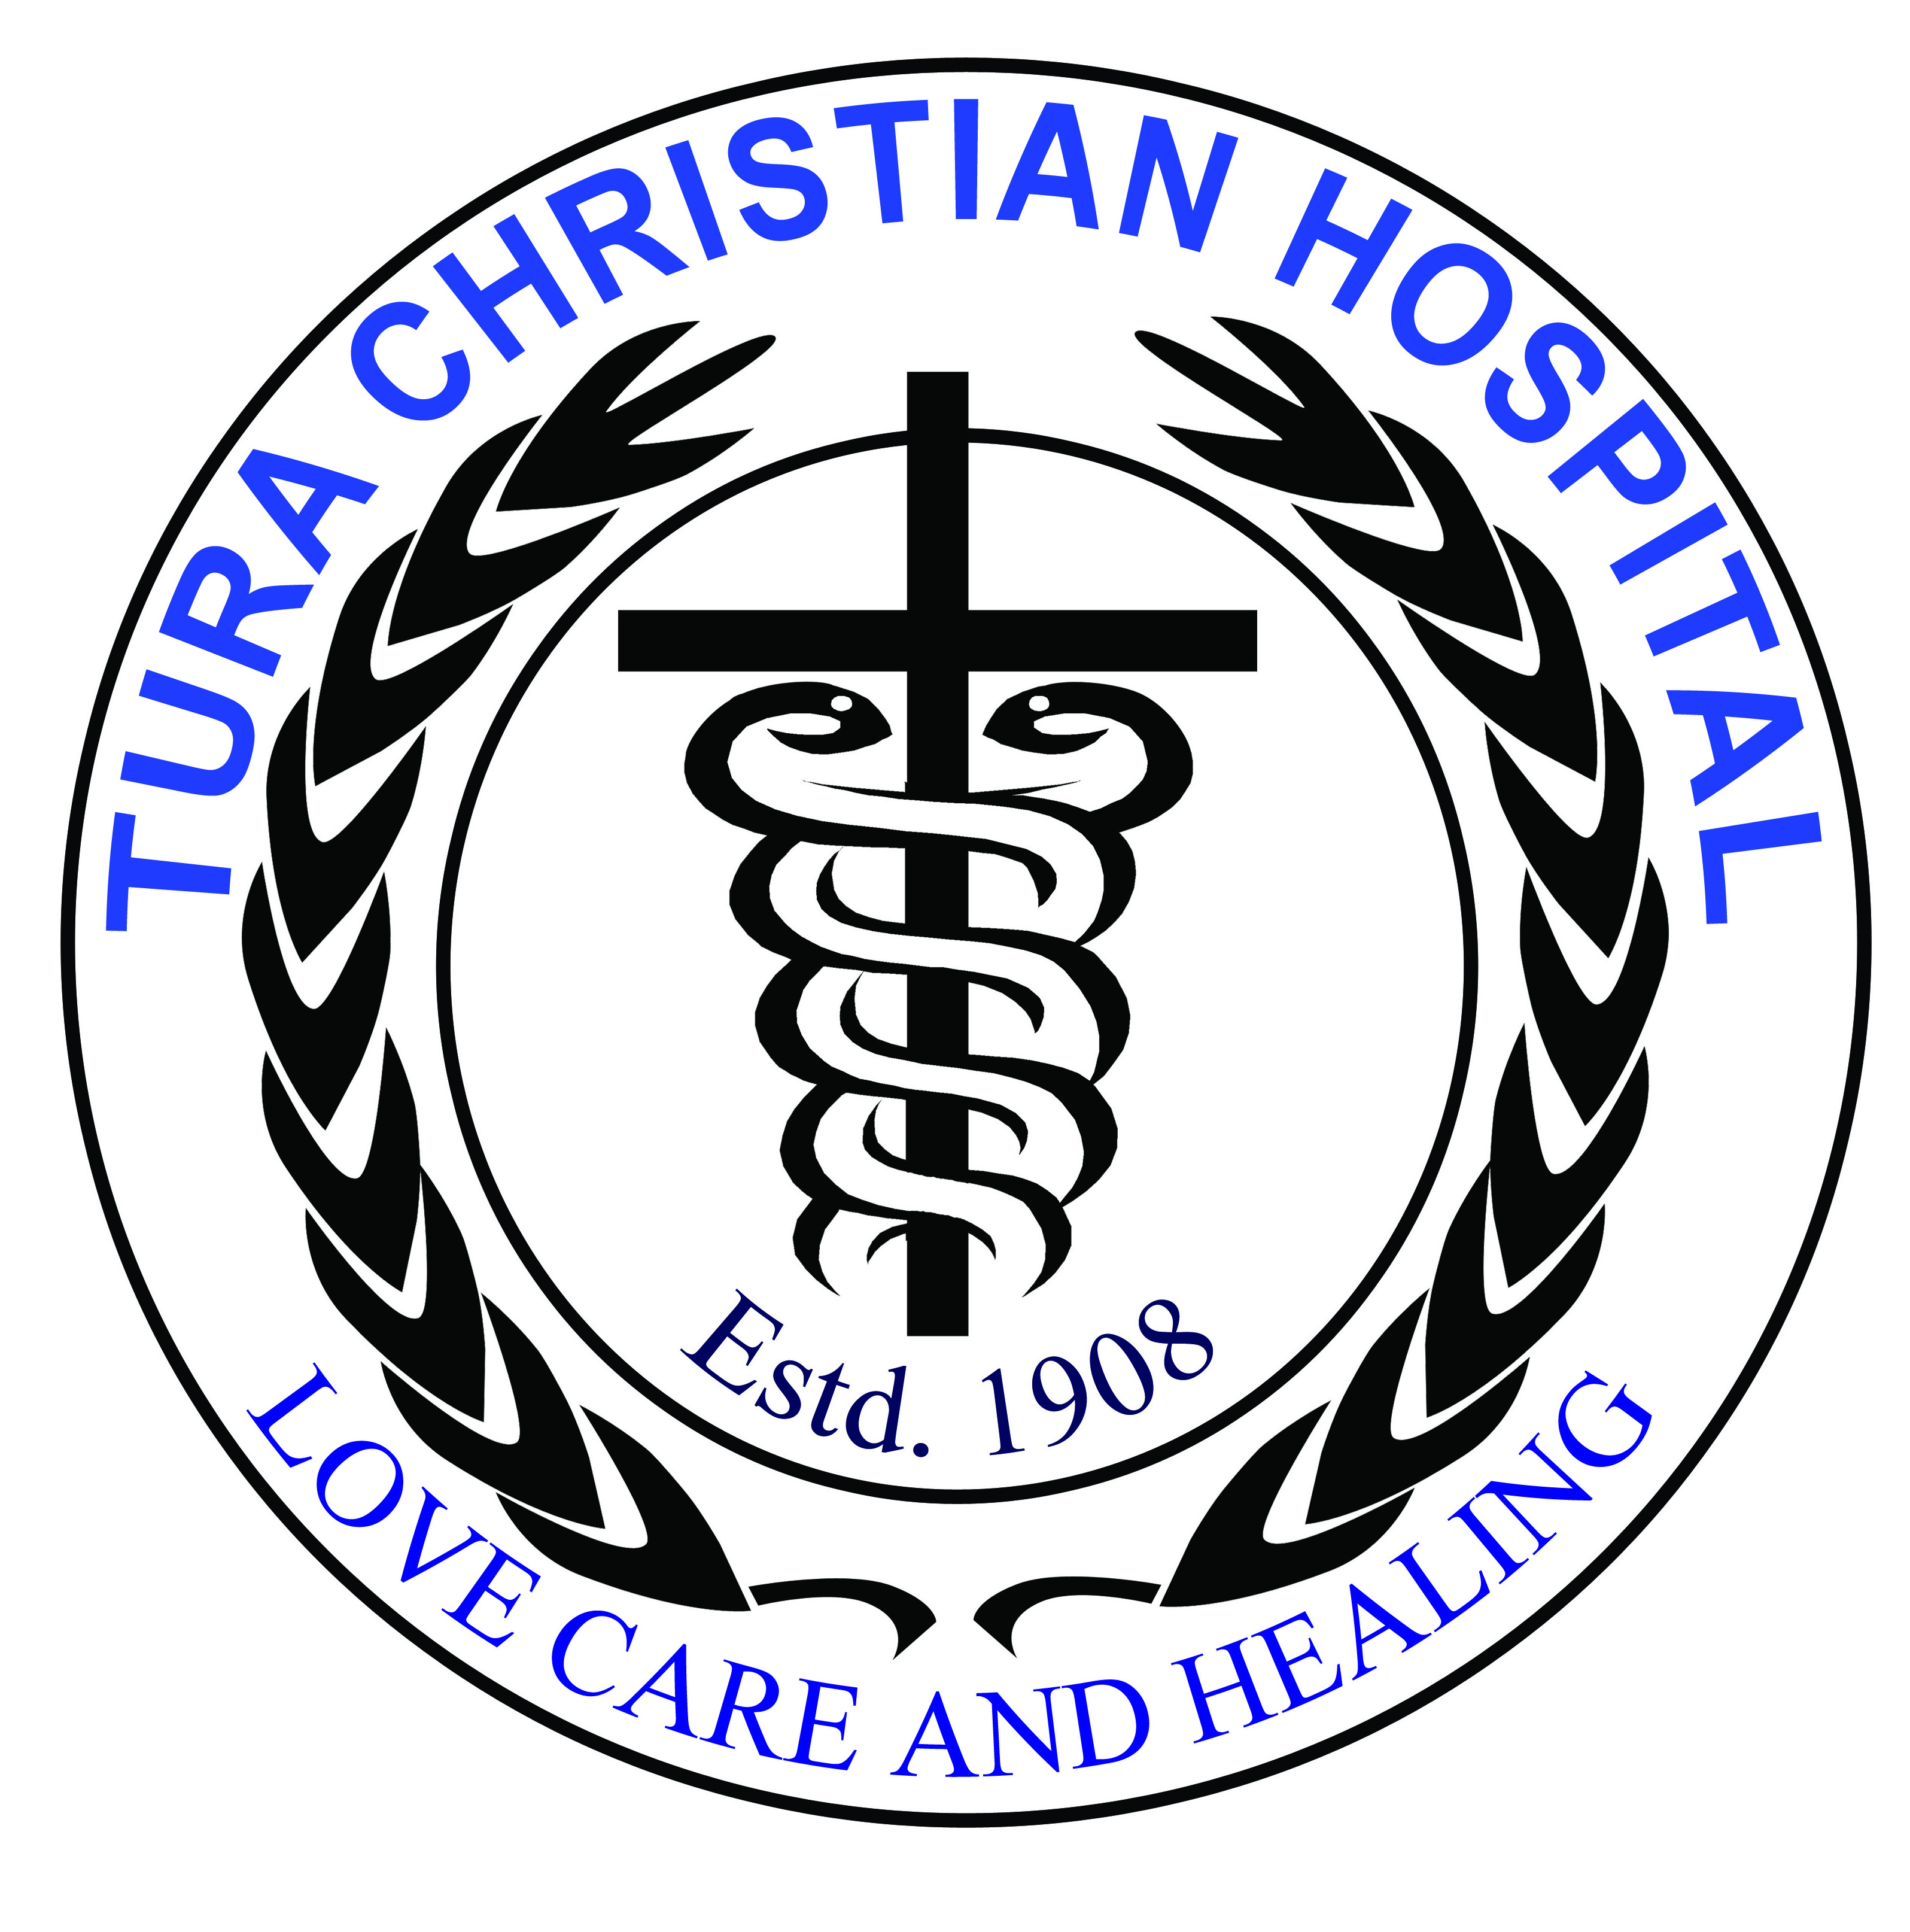 Tura Christian Hospital|Hospitals|Medical Services